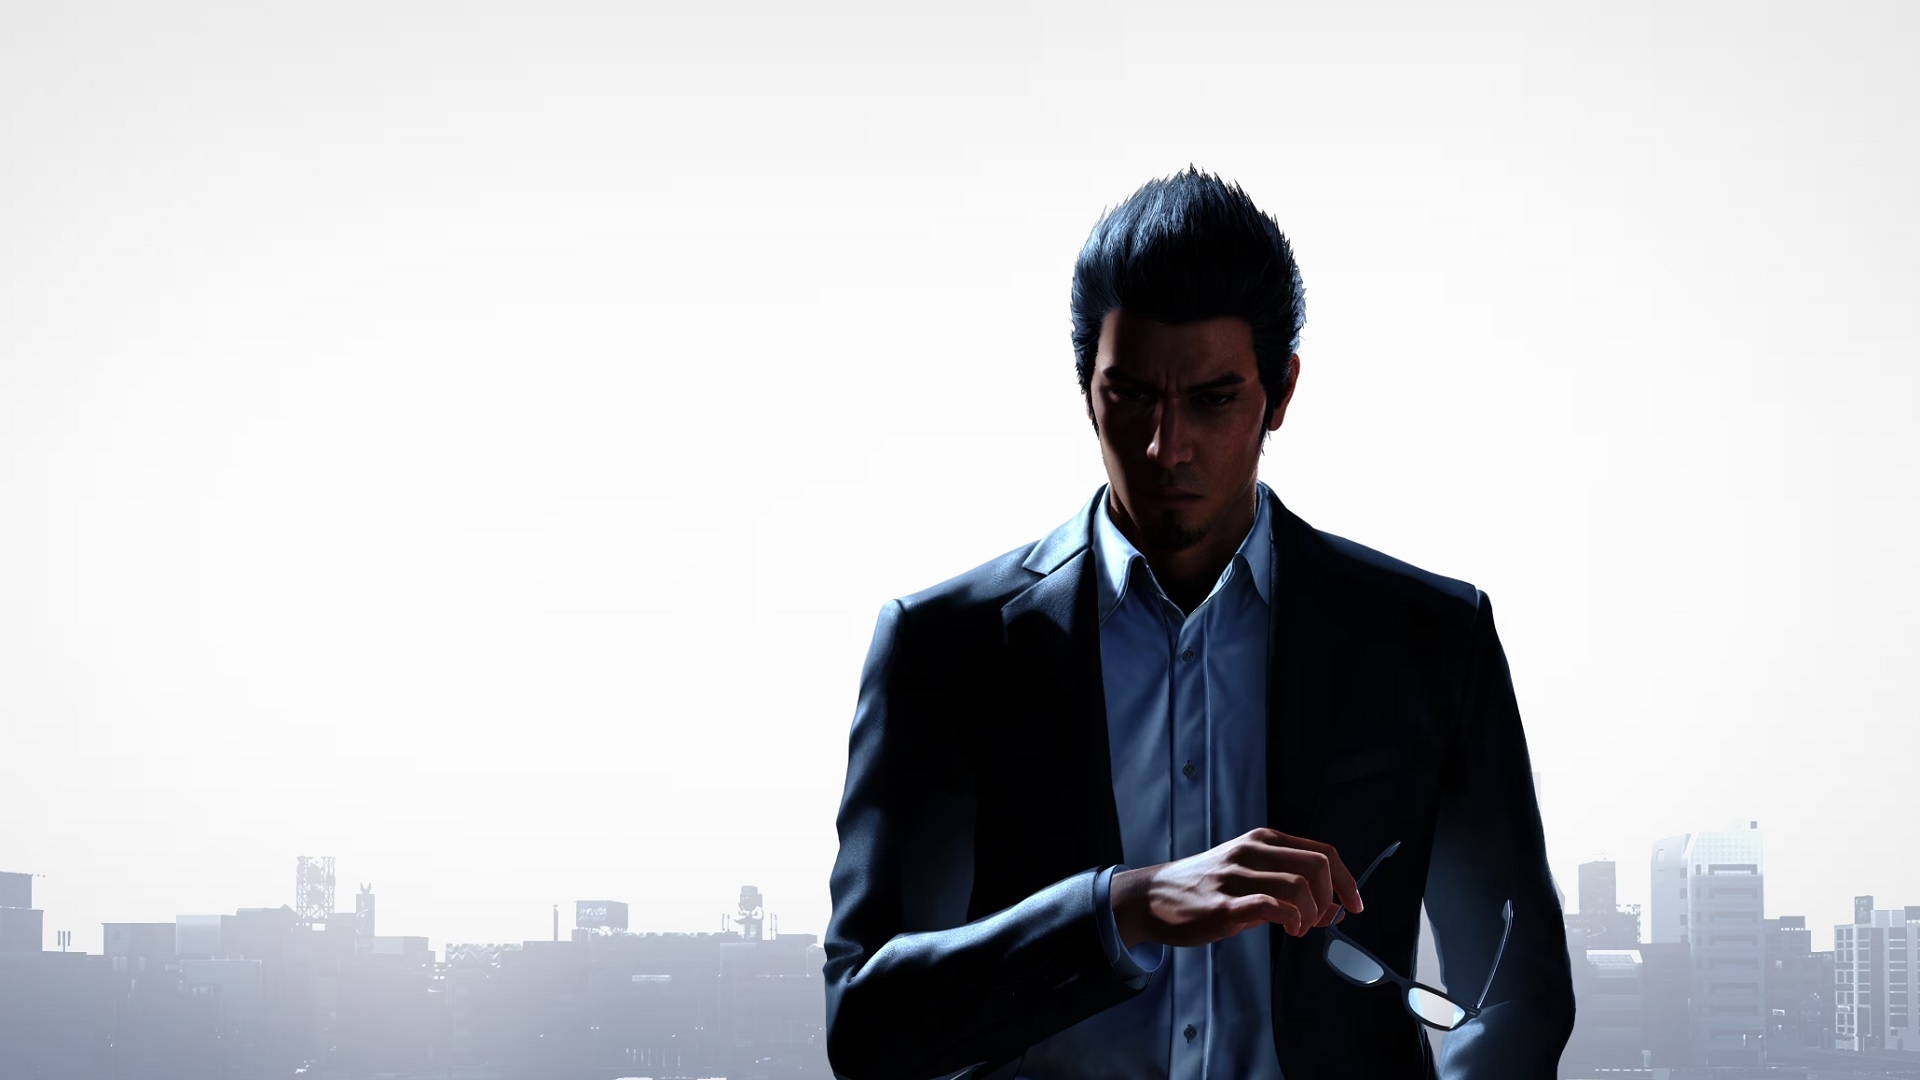 SEGA's Yakuza/Like a Dragon: Infinite Wealth Gets An English-Dubbed Trailer